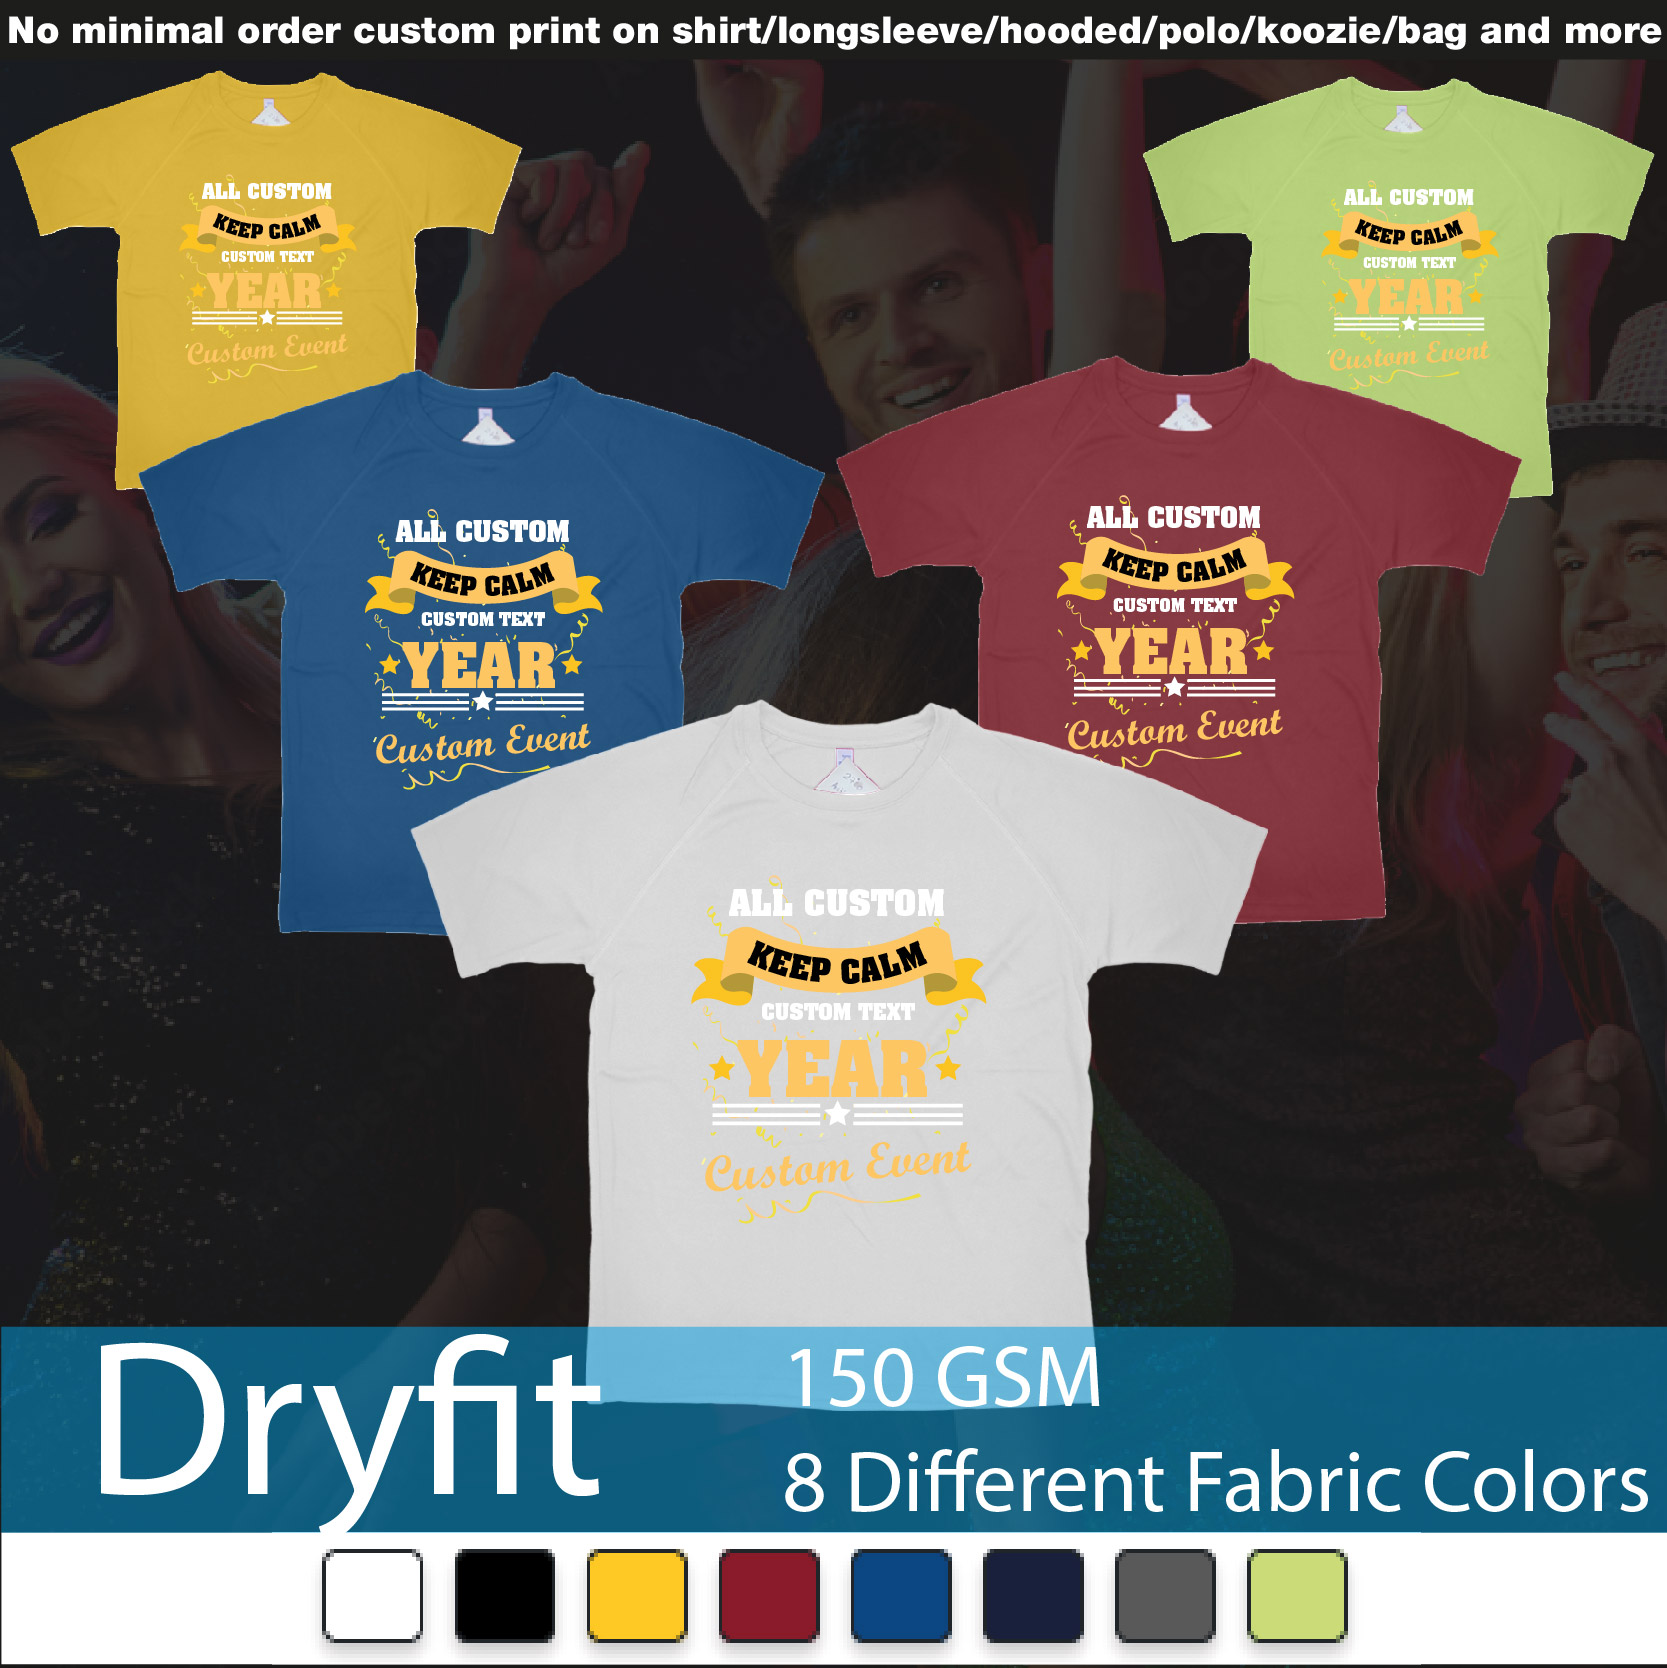 Keep Calm Event Party Birthday Bash Custom Design Text Dryfit Tshirts Samples On Demand Printing Bali